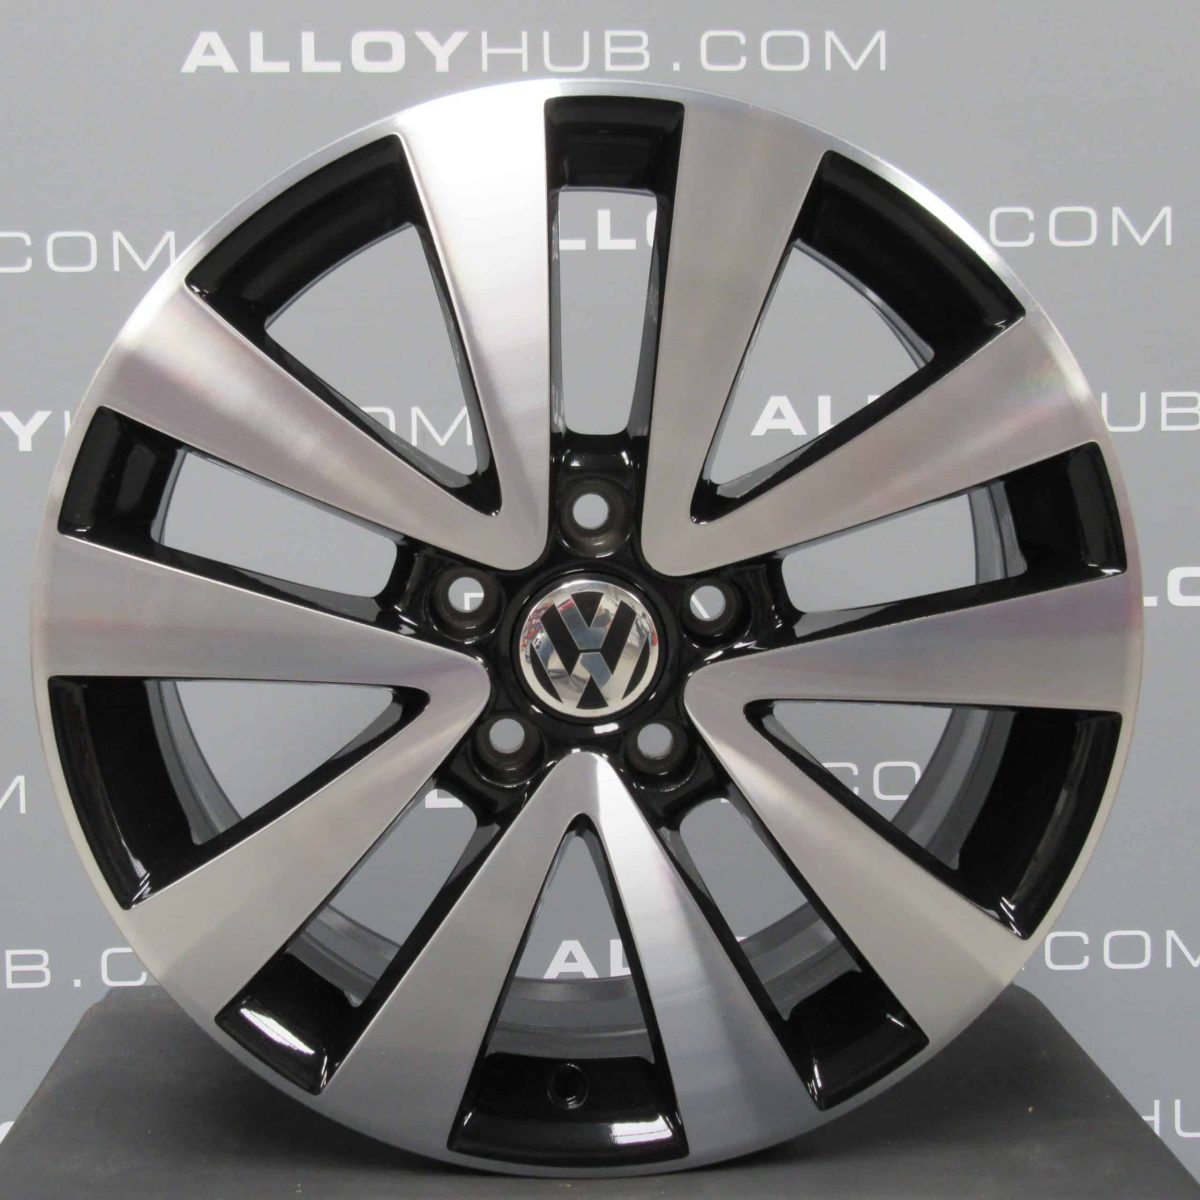 Genuine Volkswagen VW Golf MK6 Seattle Shadow Spoke 17" inch Alloy Wheels with Gloss Black & Diamond Turned Finish 5K0 601 025 R